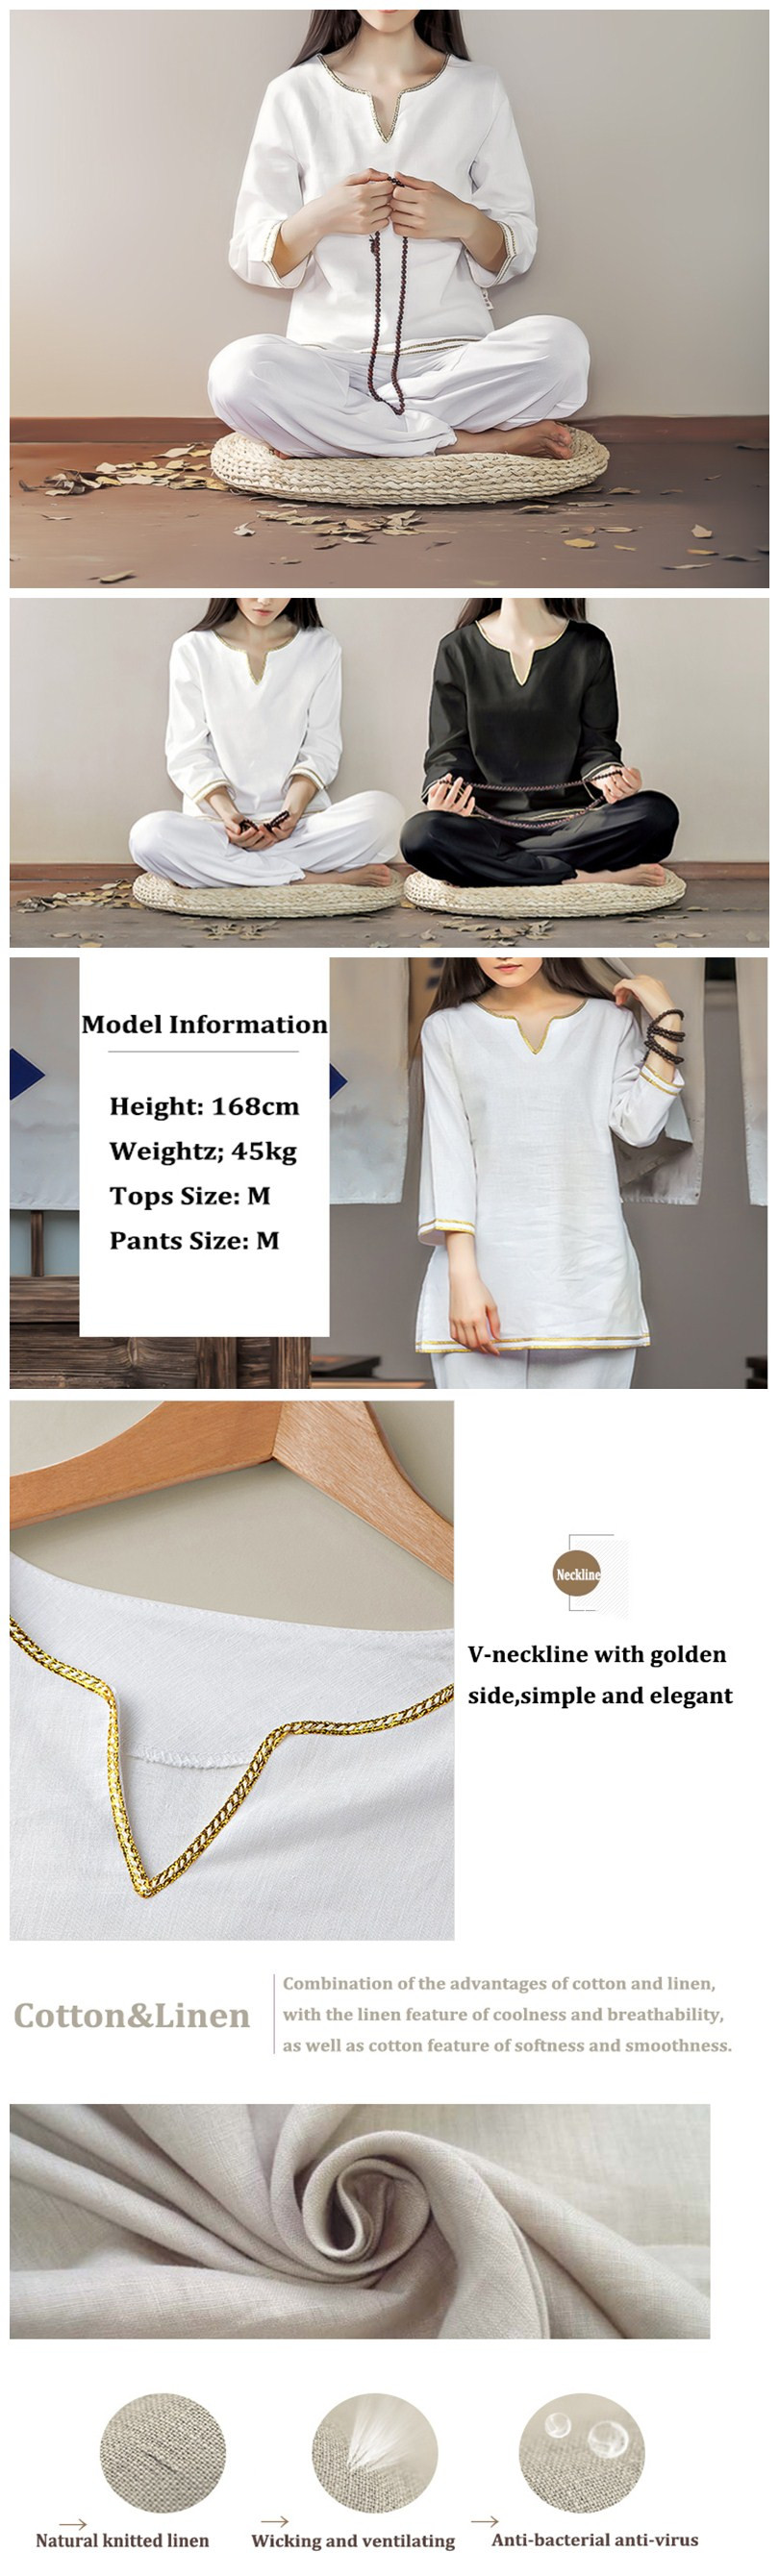 Women-Yoga-Suit-Cotton-Linen-Meditation-Clothing-Set-Lady-Dance-Fitness-Clothes-Sportswear-1078849-1